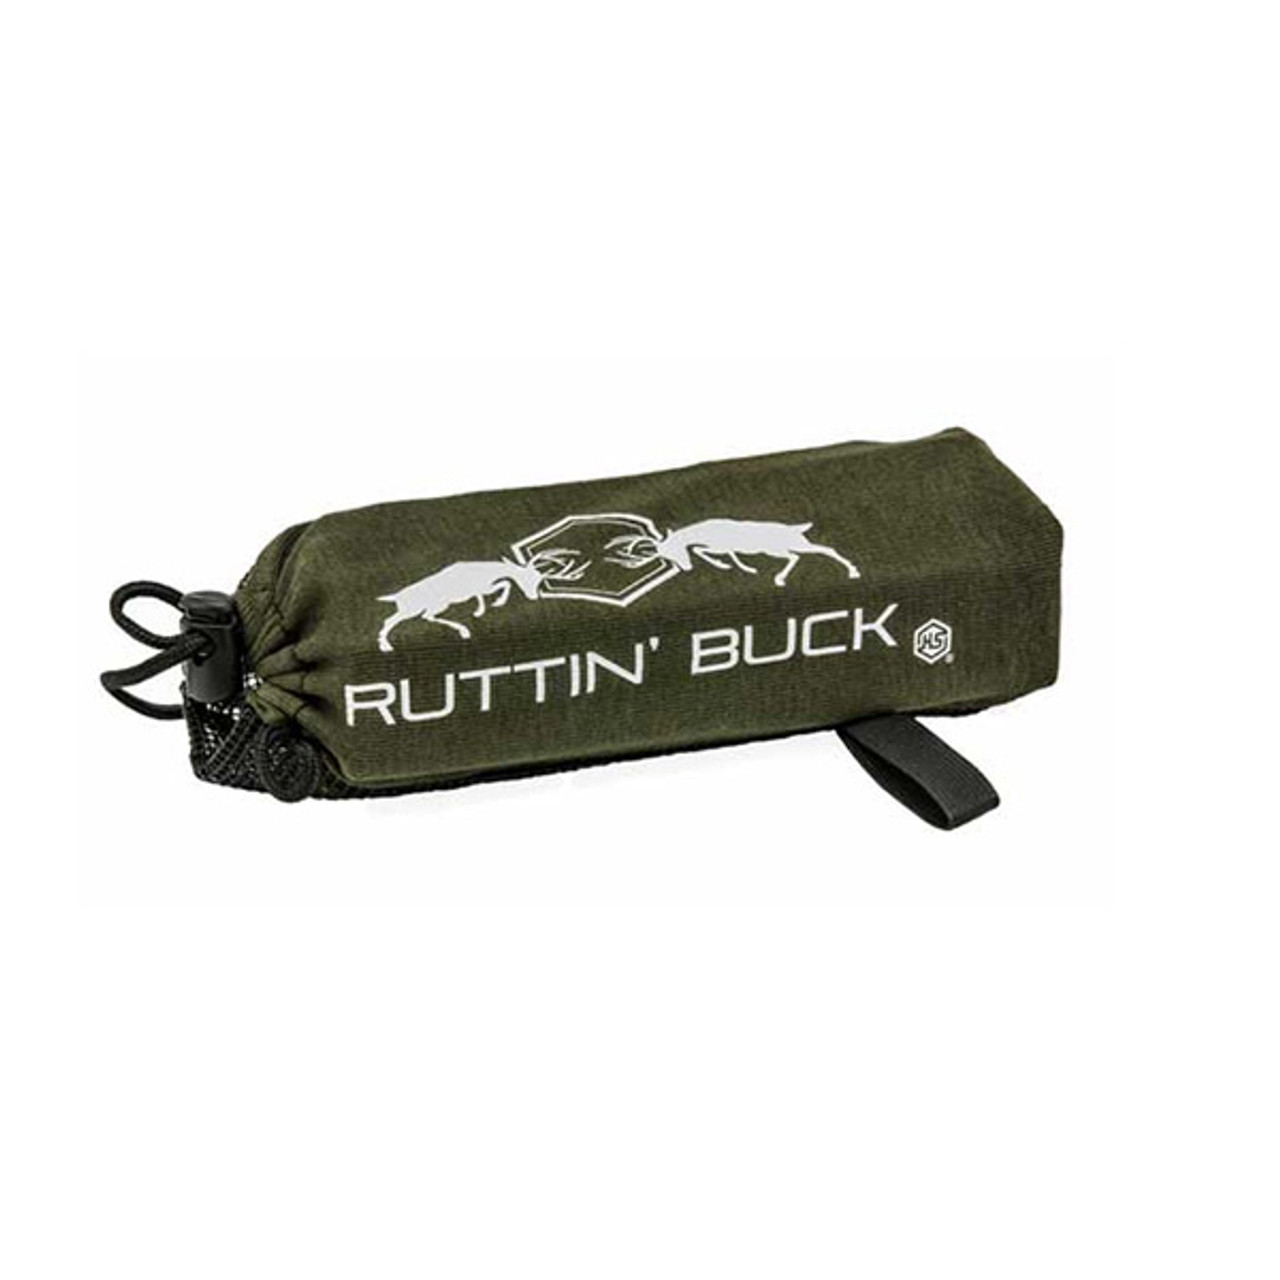 Ruttin' Buck Rattling Bag